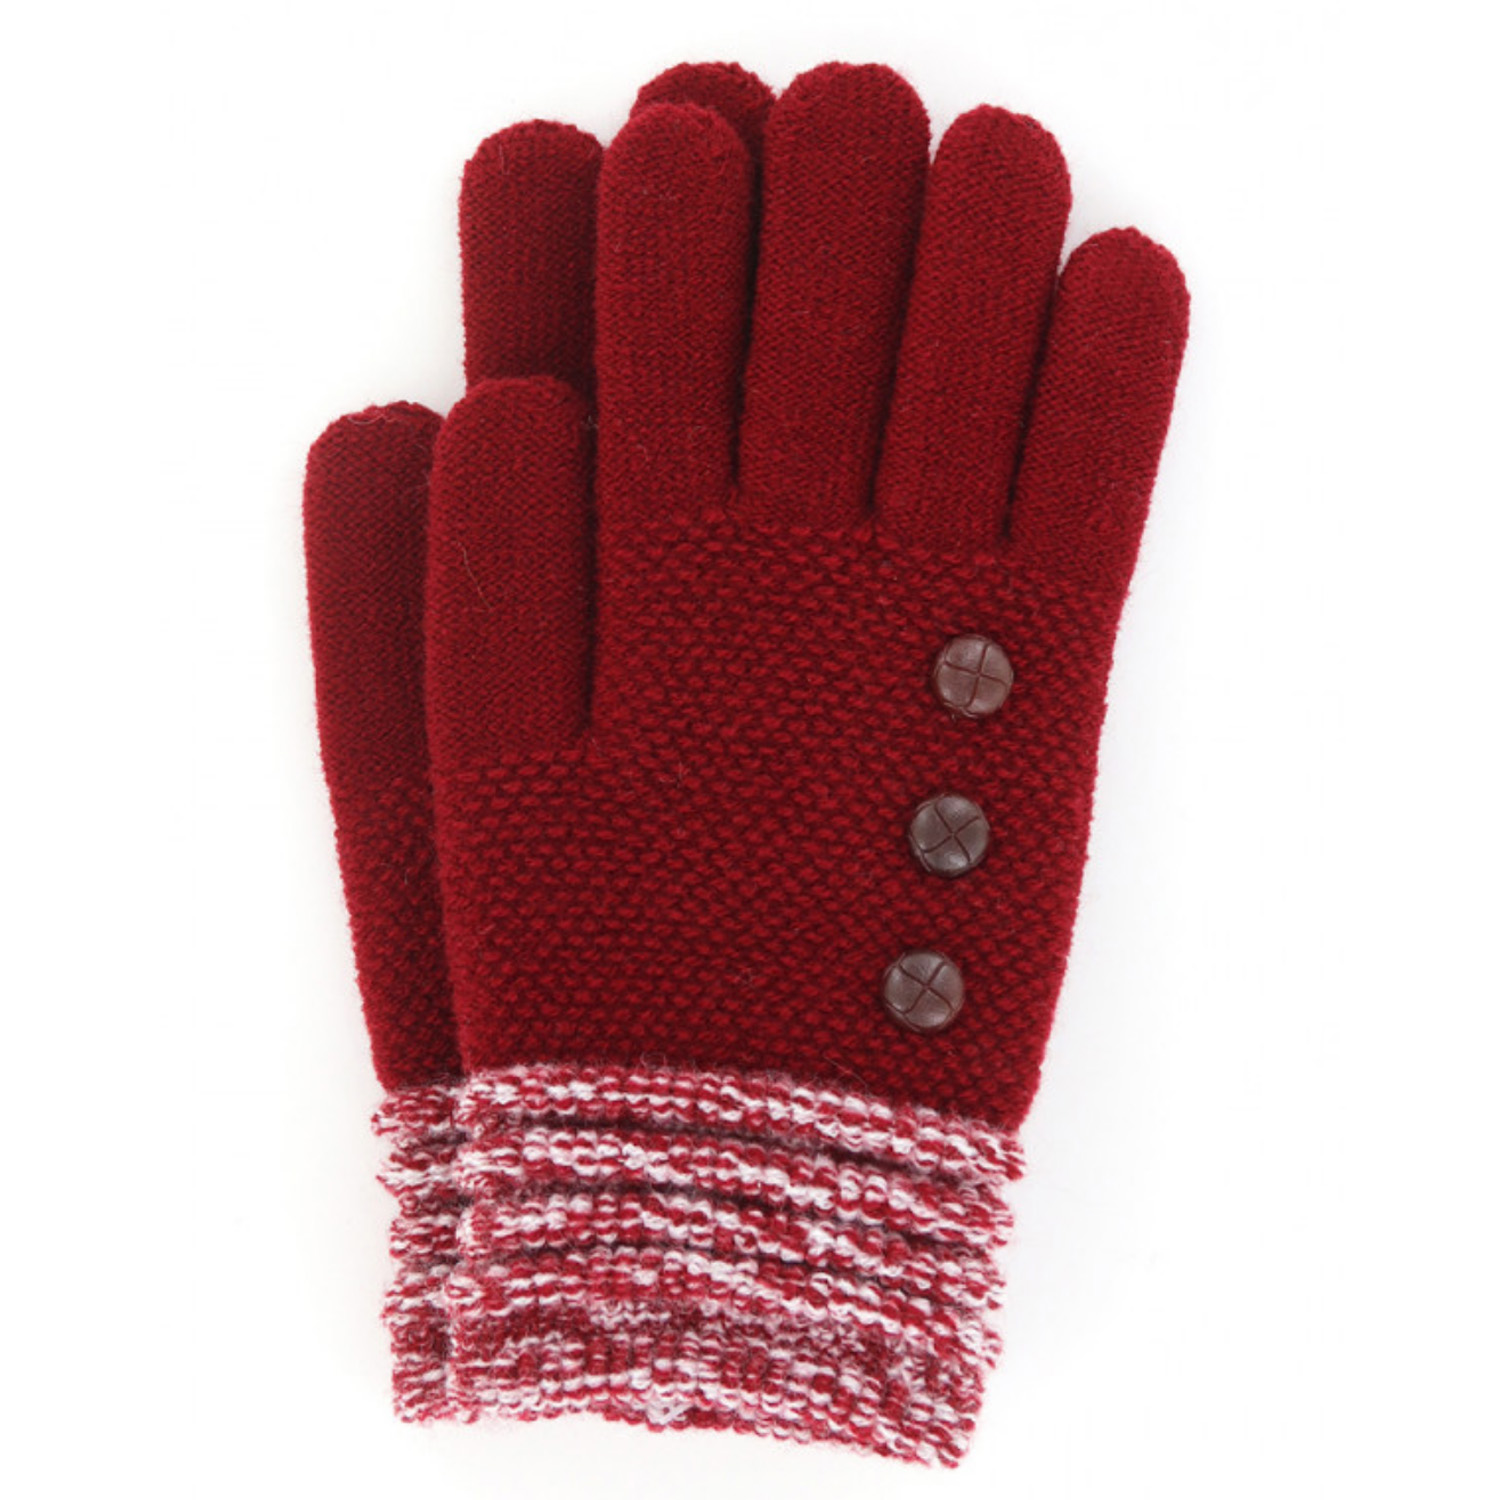 Britt's Knit's Knit Gloves Red